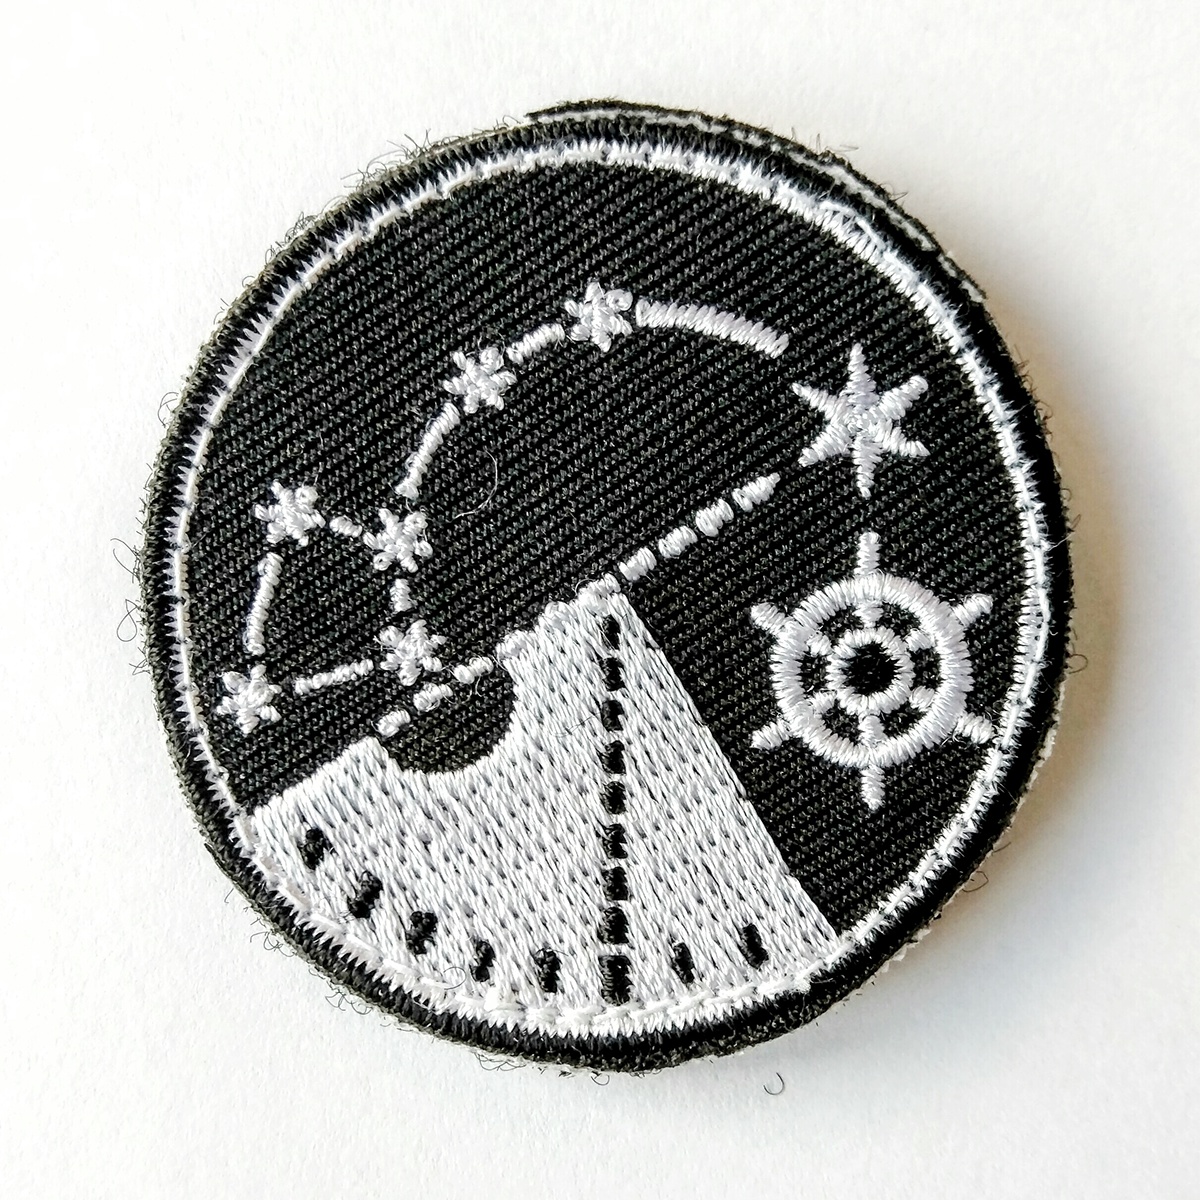 wndsn patches Embroidery polaris Quadrant navigation